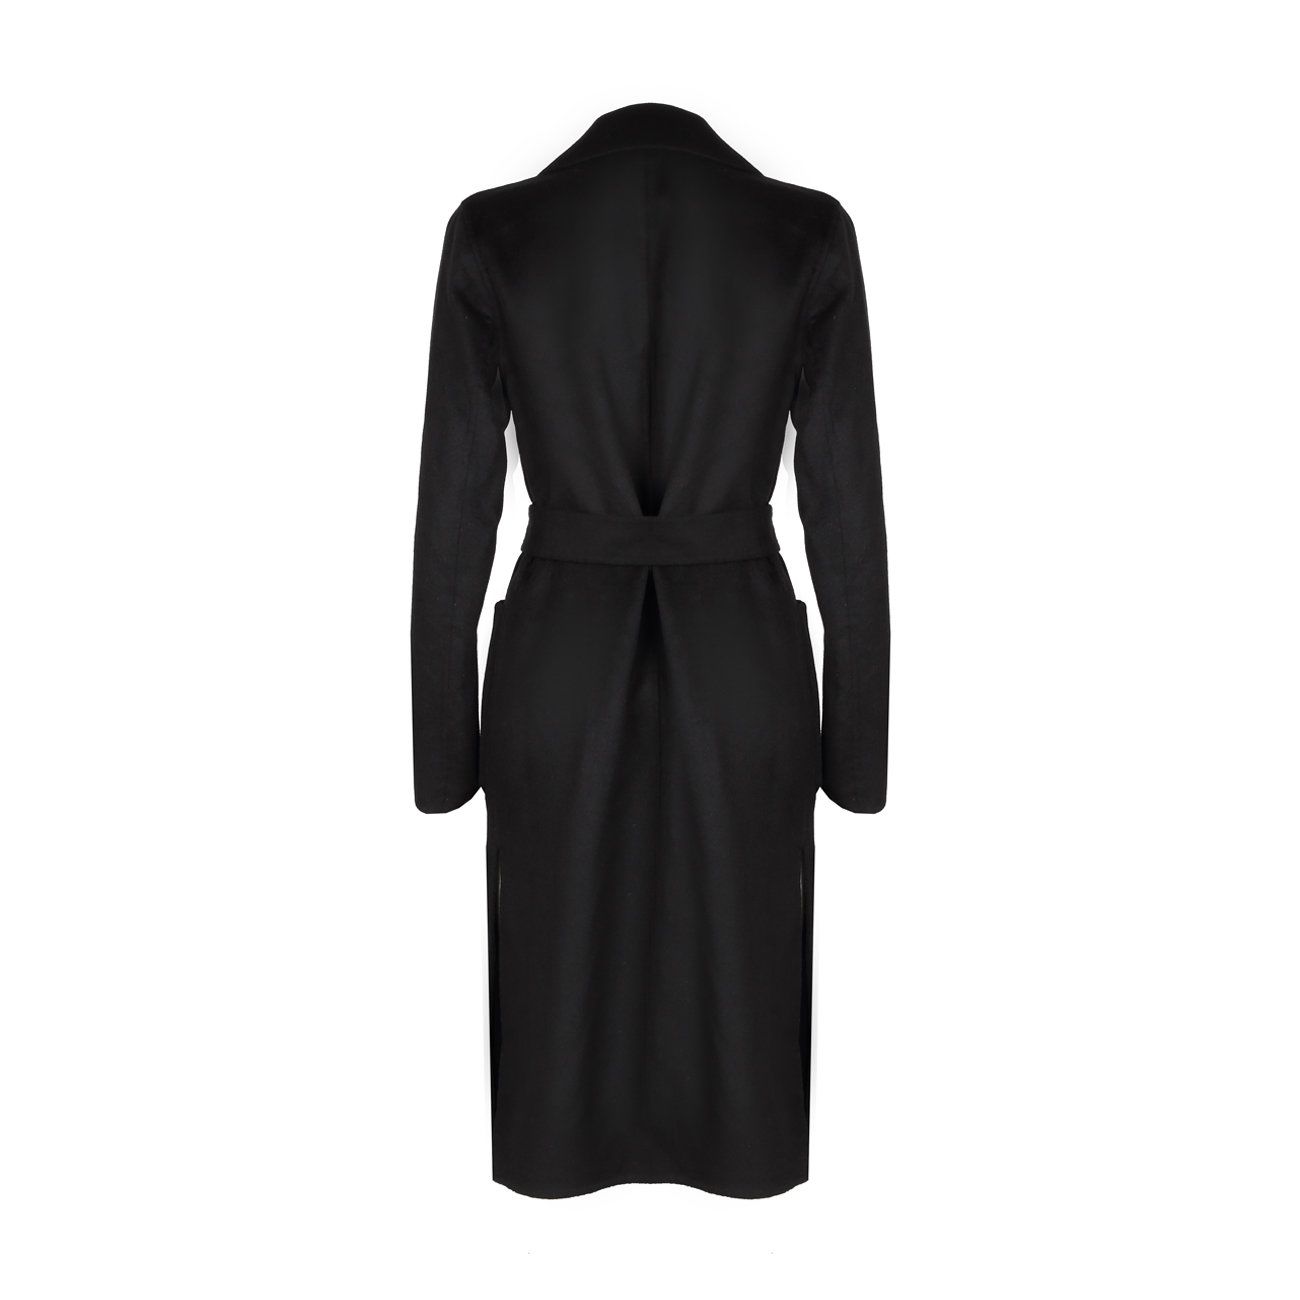 MICHAEL KORS LONG COAT WITH BELT Woman Black | Mascheroni Store